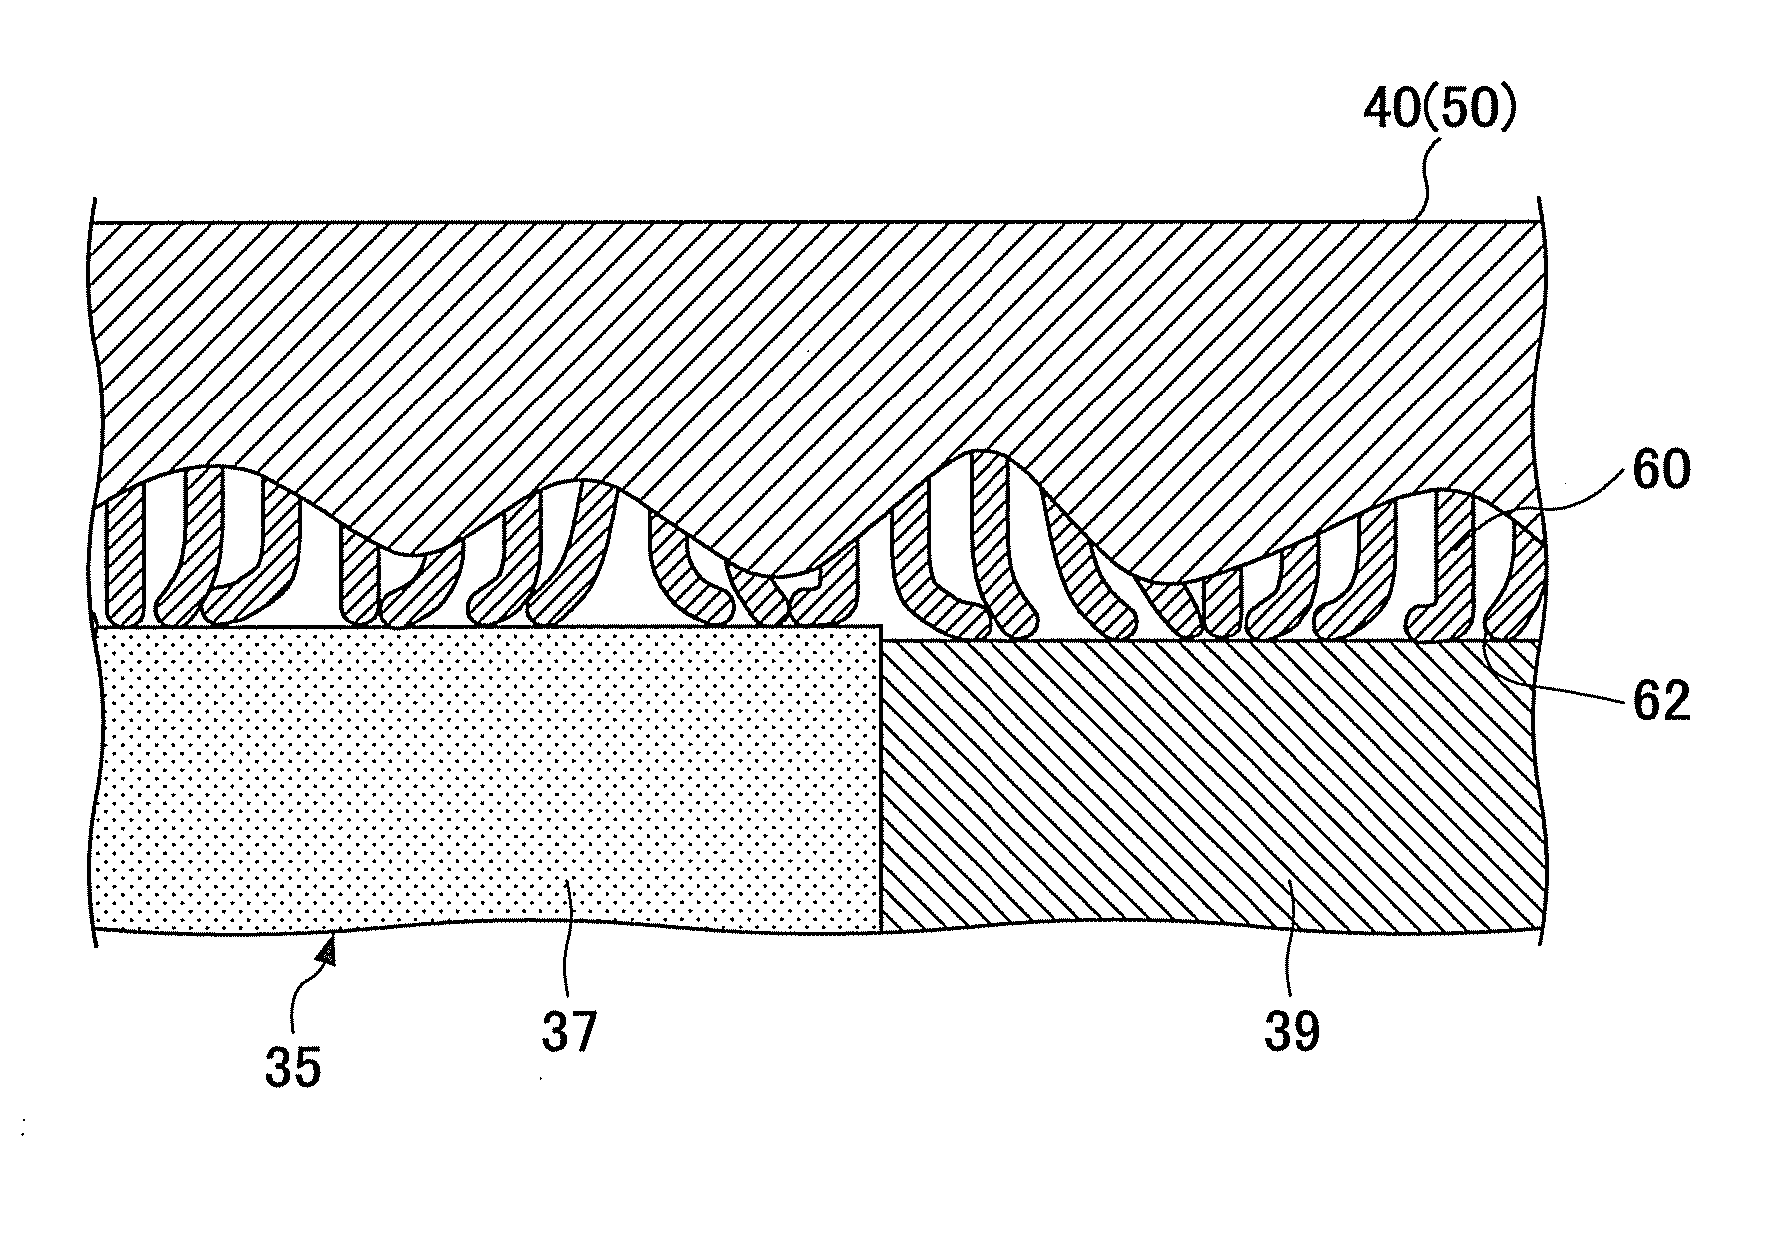 Heat radiator of semiconductor package